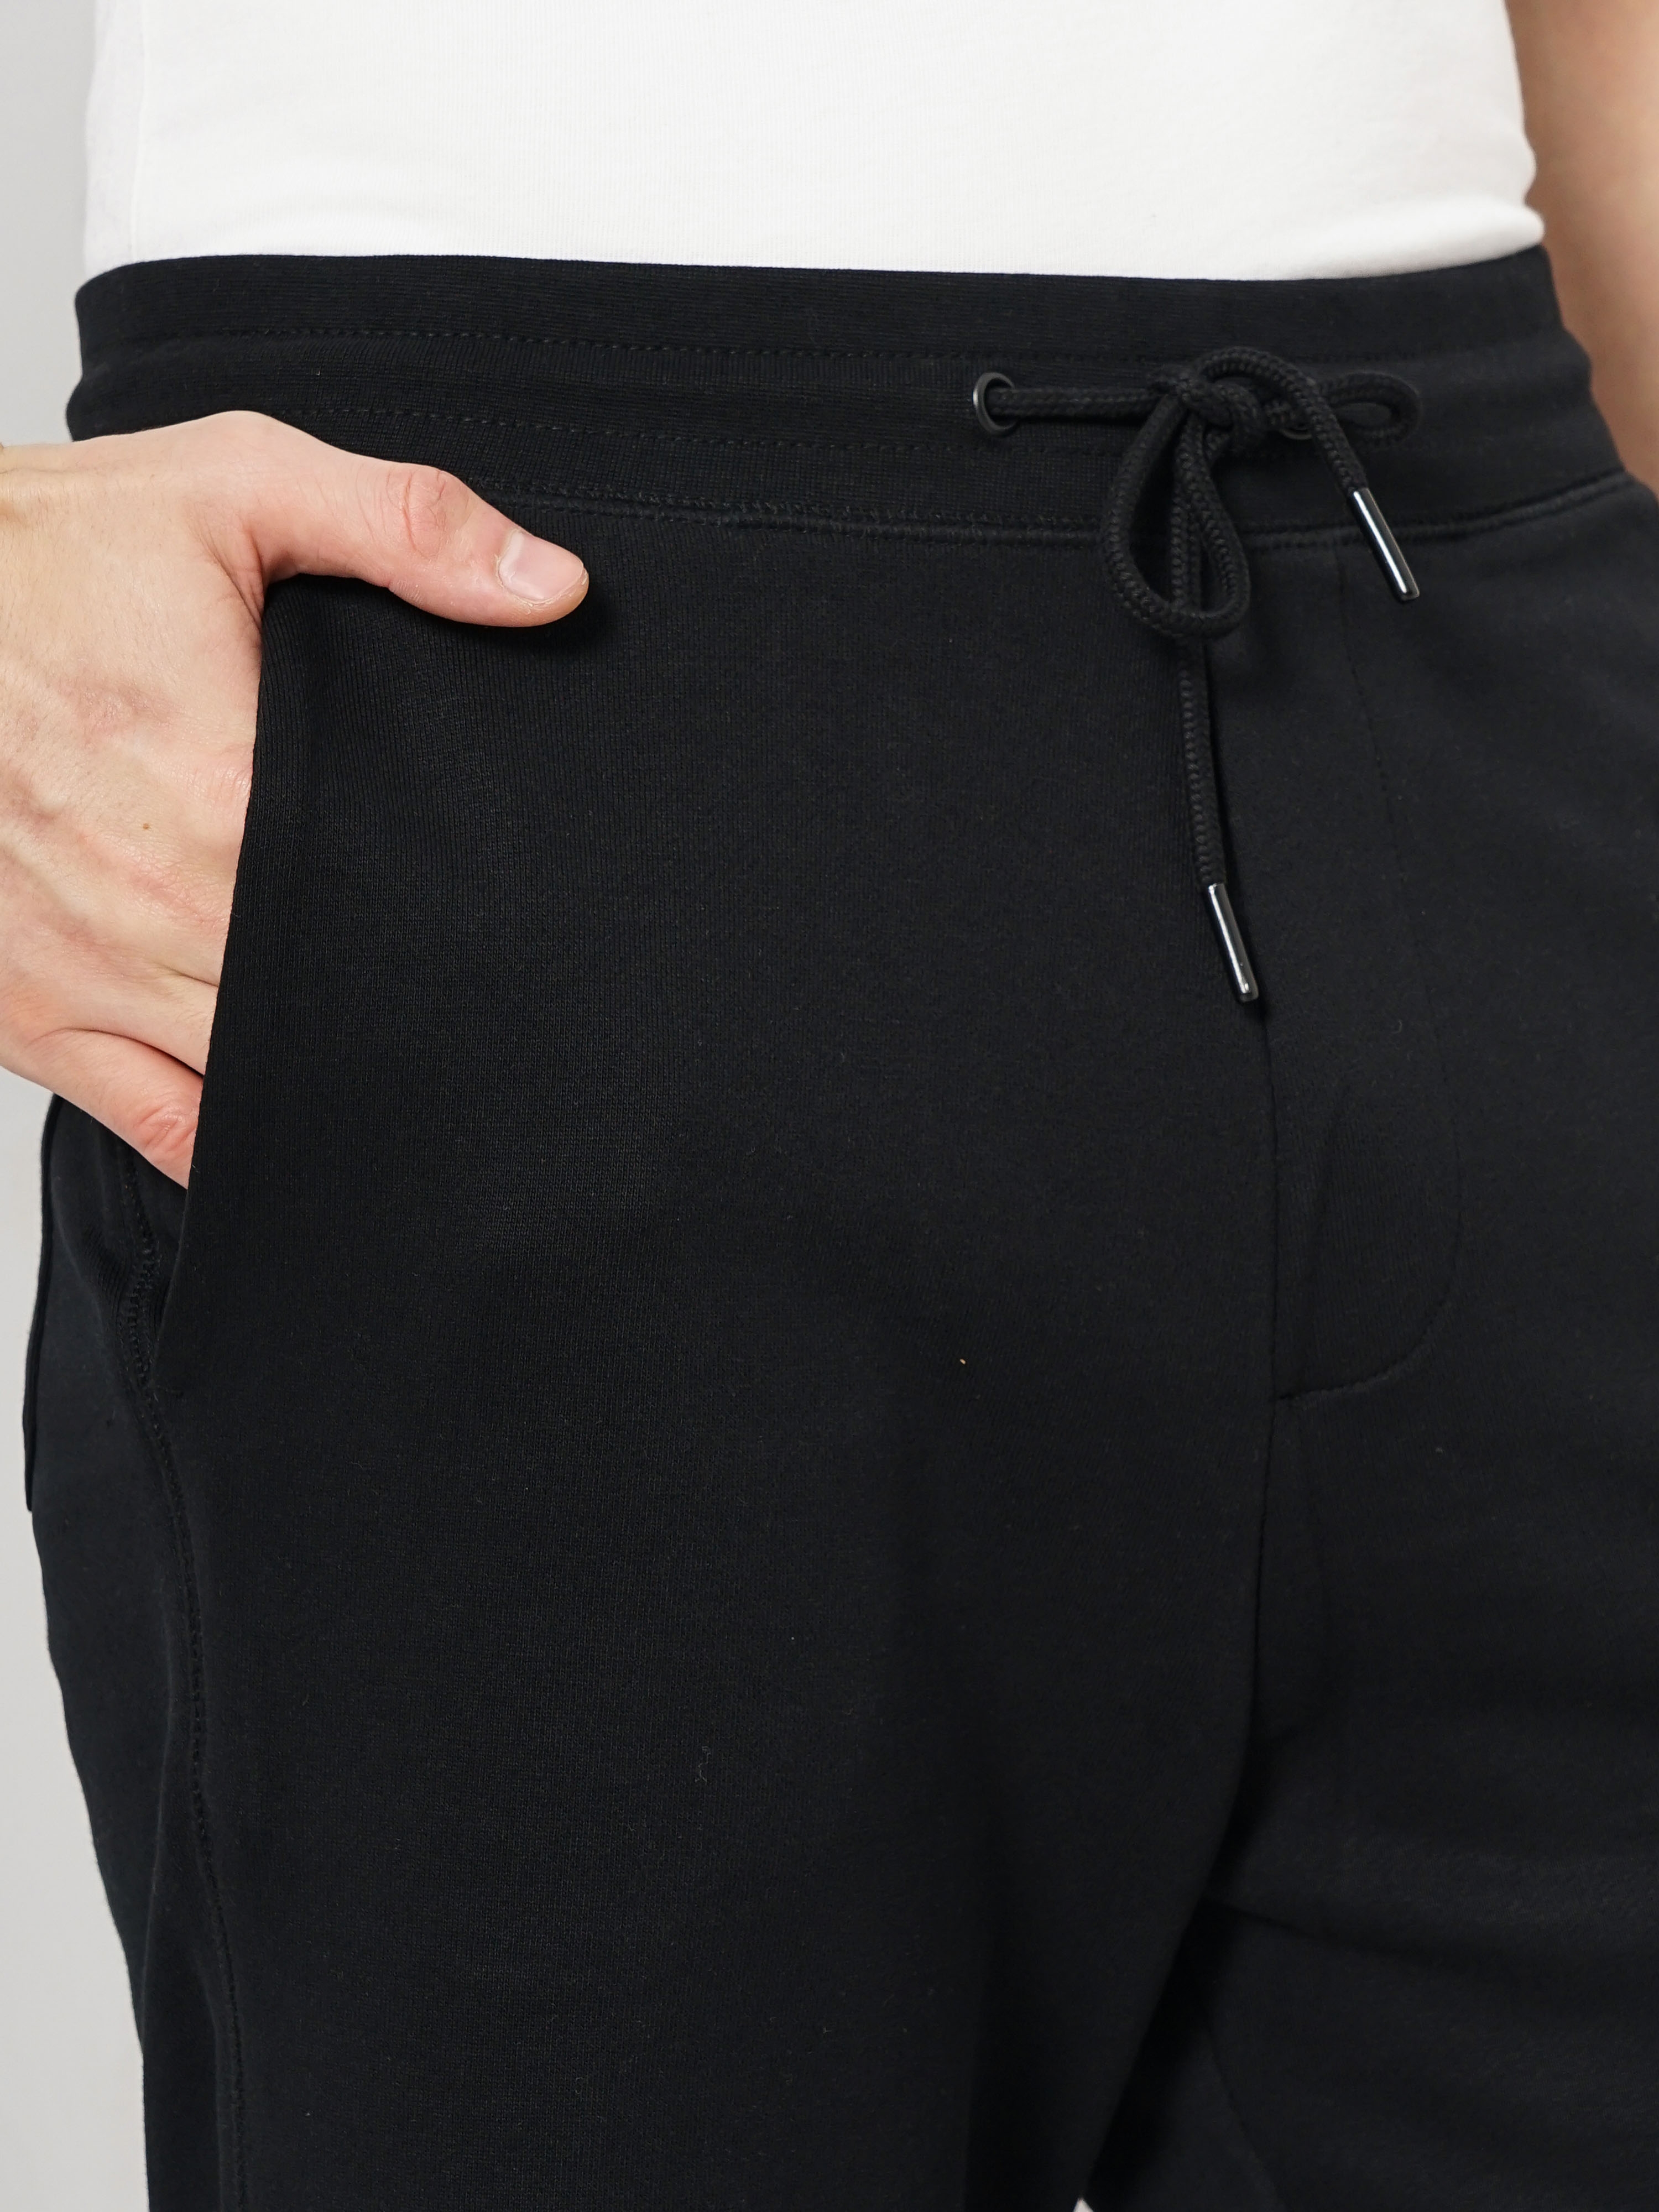 Celio Men's Solid Solid Black Cotton Shorts